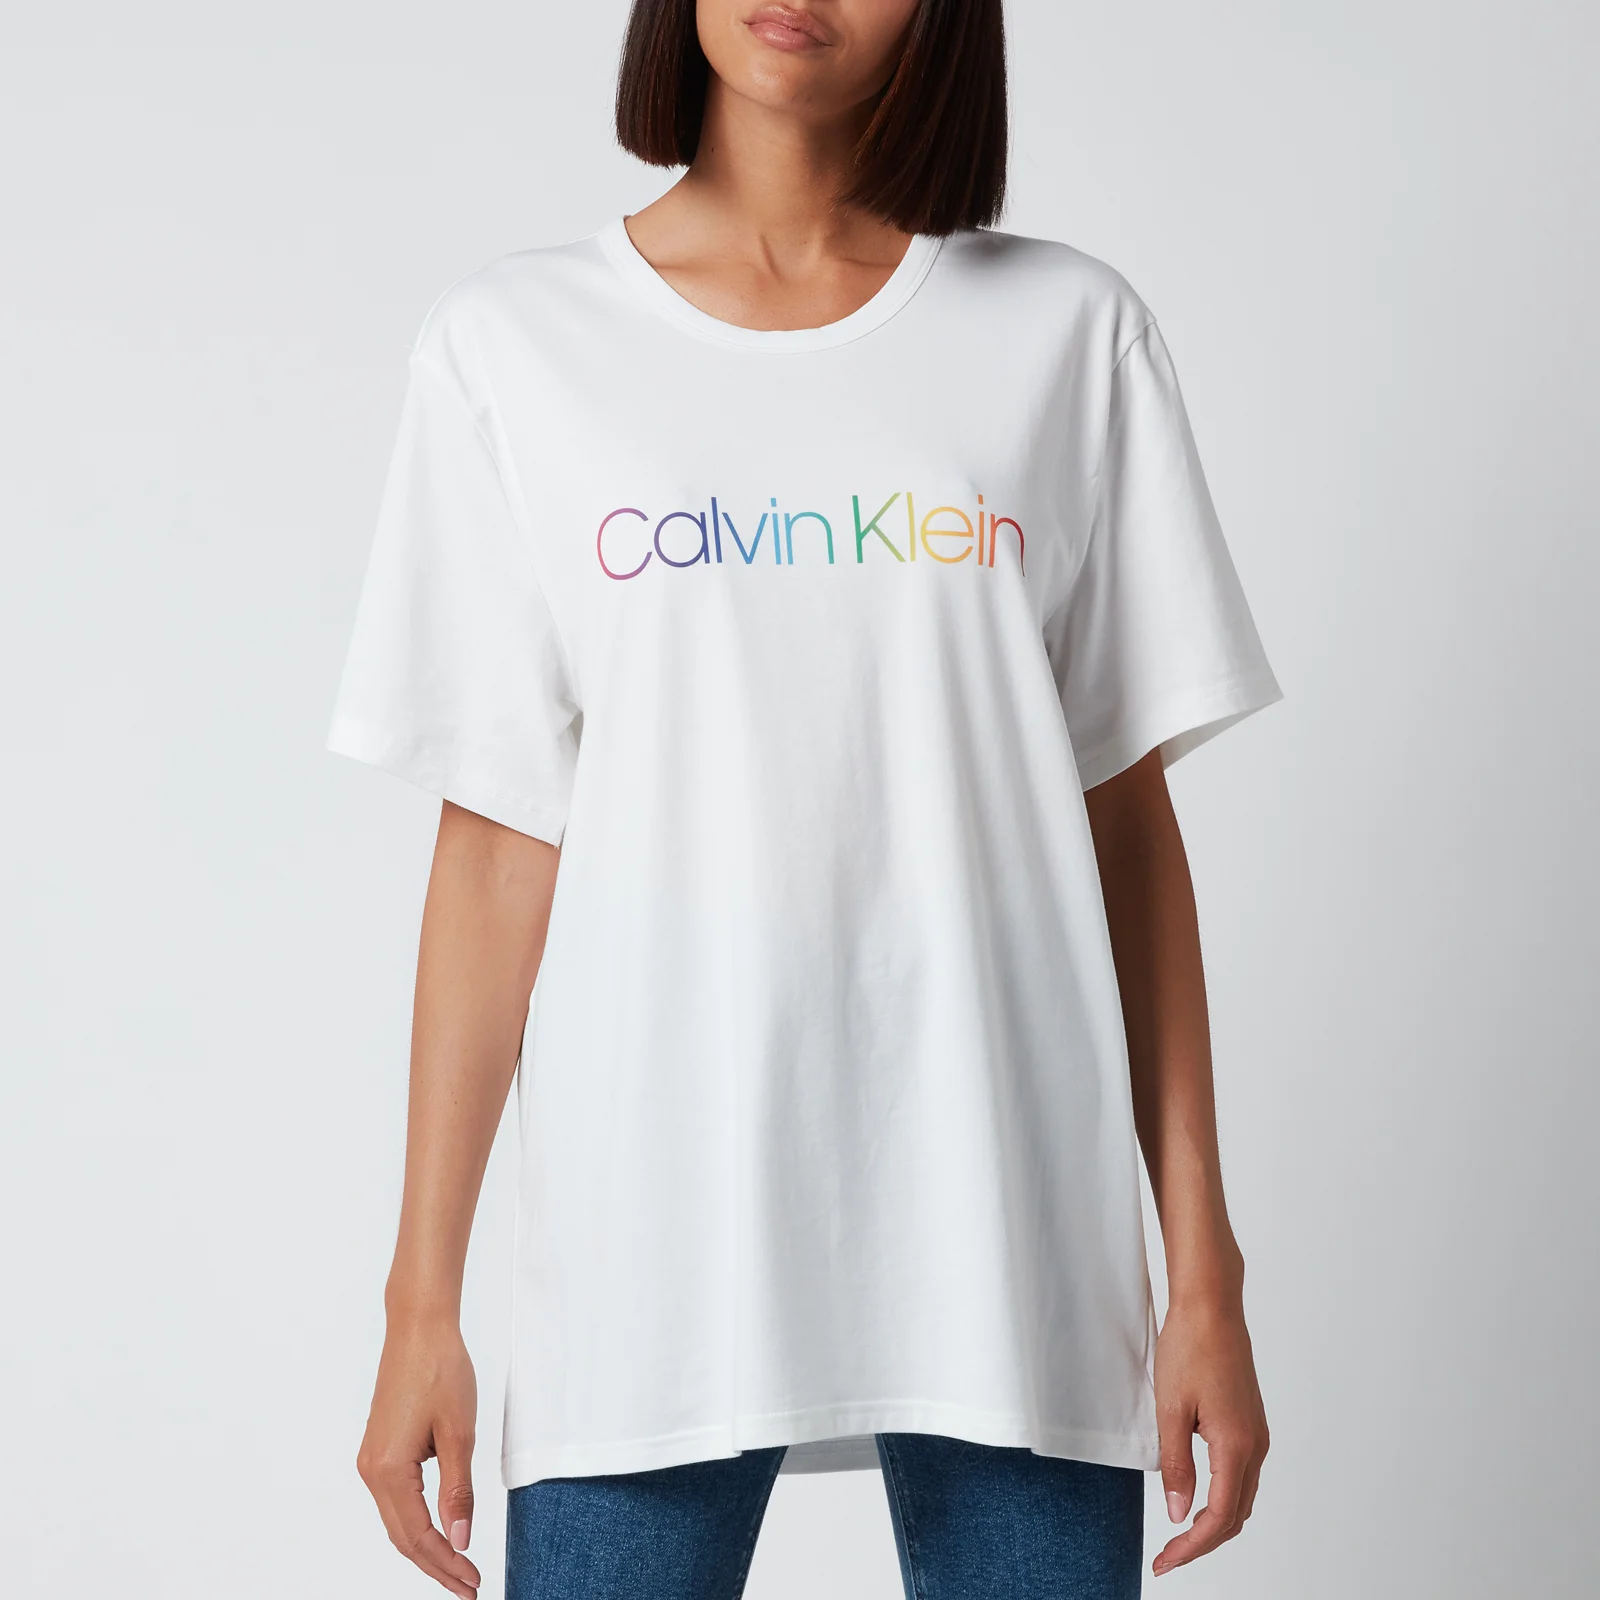 Calvin Klein Men's Crewneck T-Shirt - White Image 1